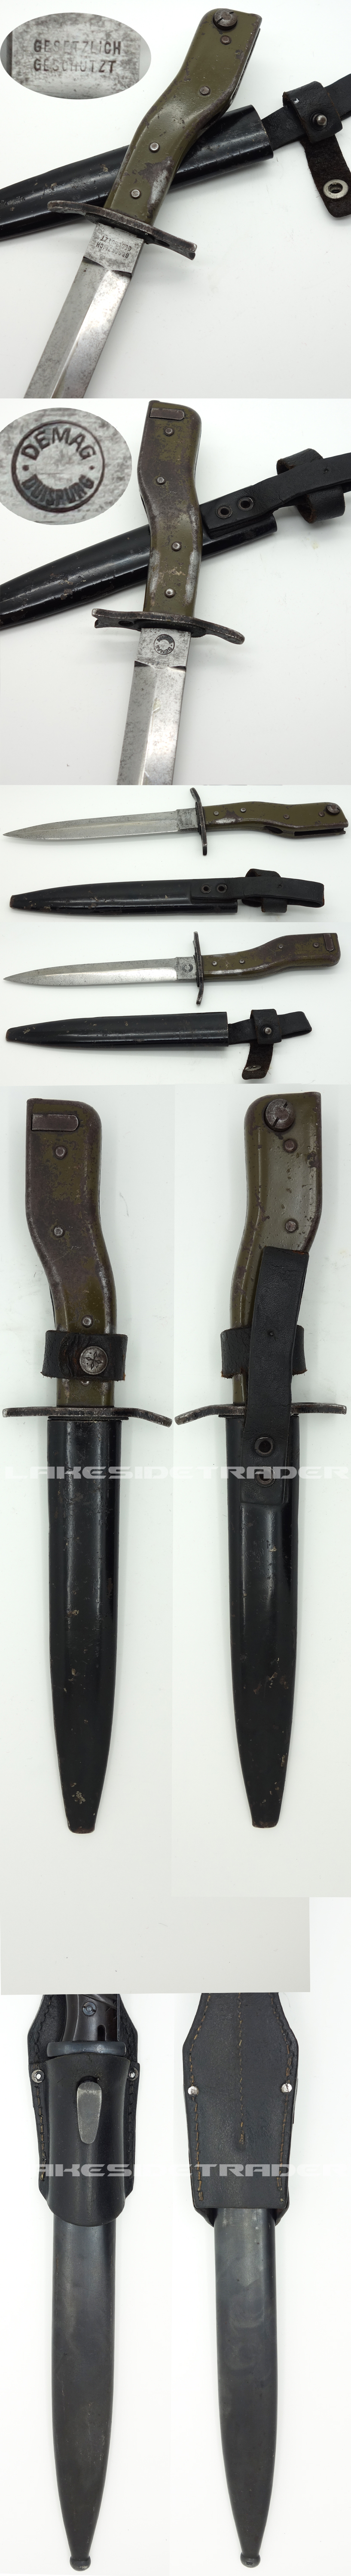 Crank-grip Fighting Knife/Bayonet by Demag